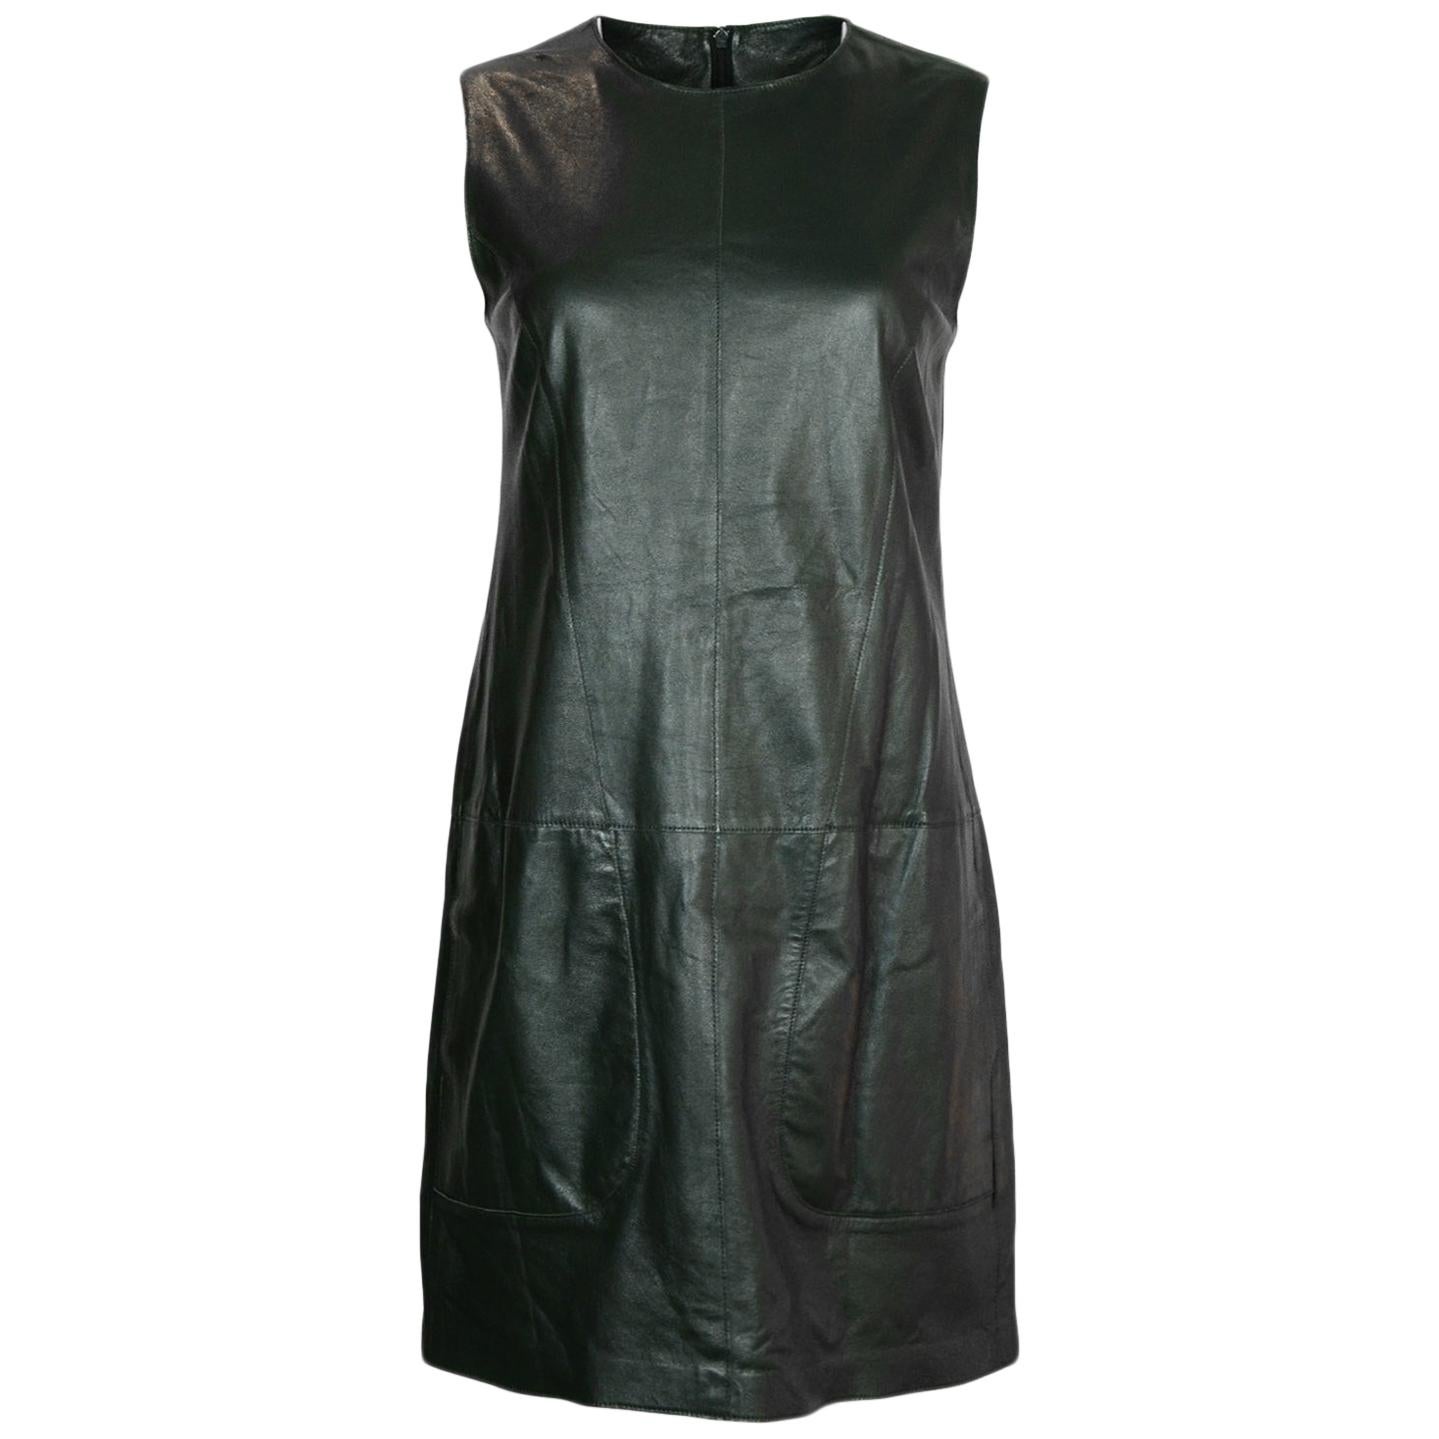 Vince Green Leather Sleeveless Dress sz 6